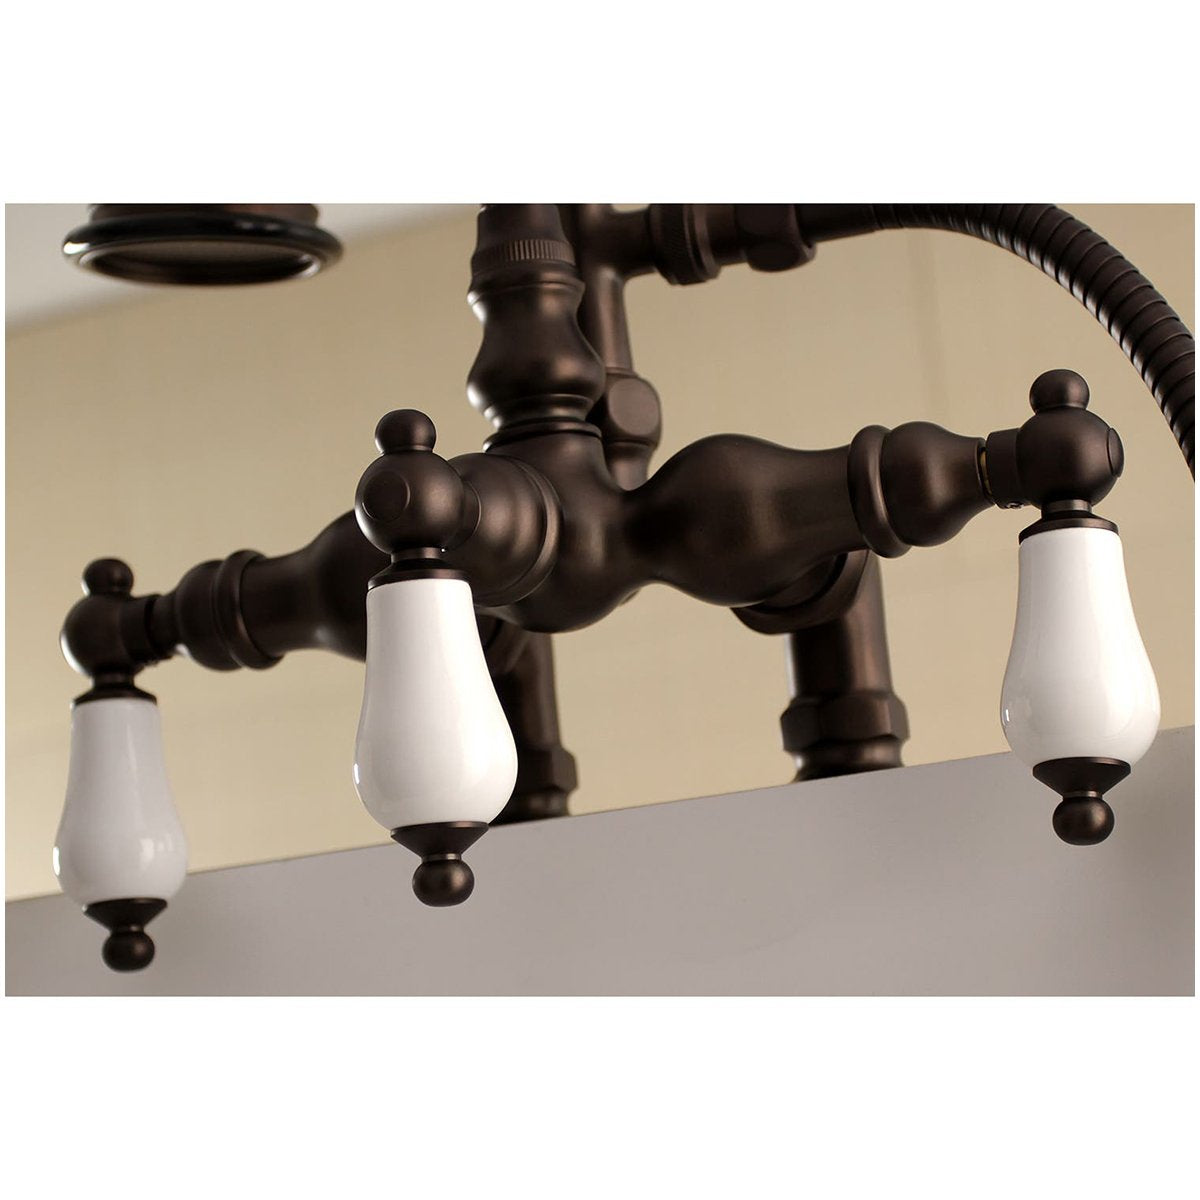 Aqua Vintage AE15TX-P Clawfoot Tub Faucet with Hand Shower